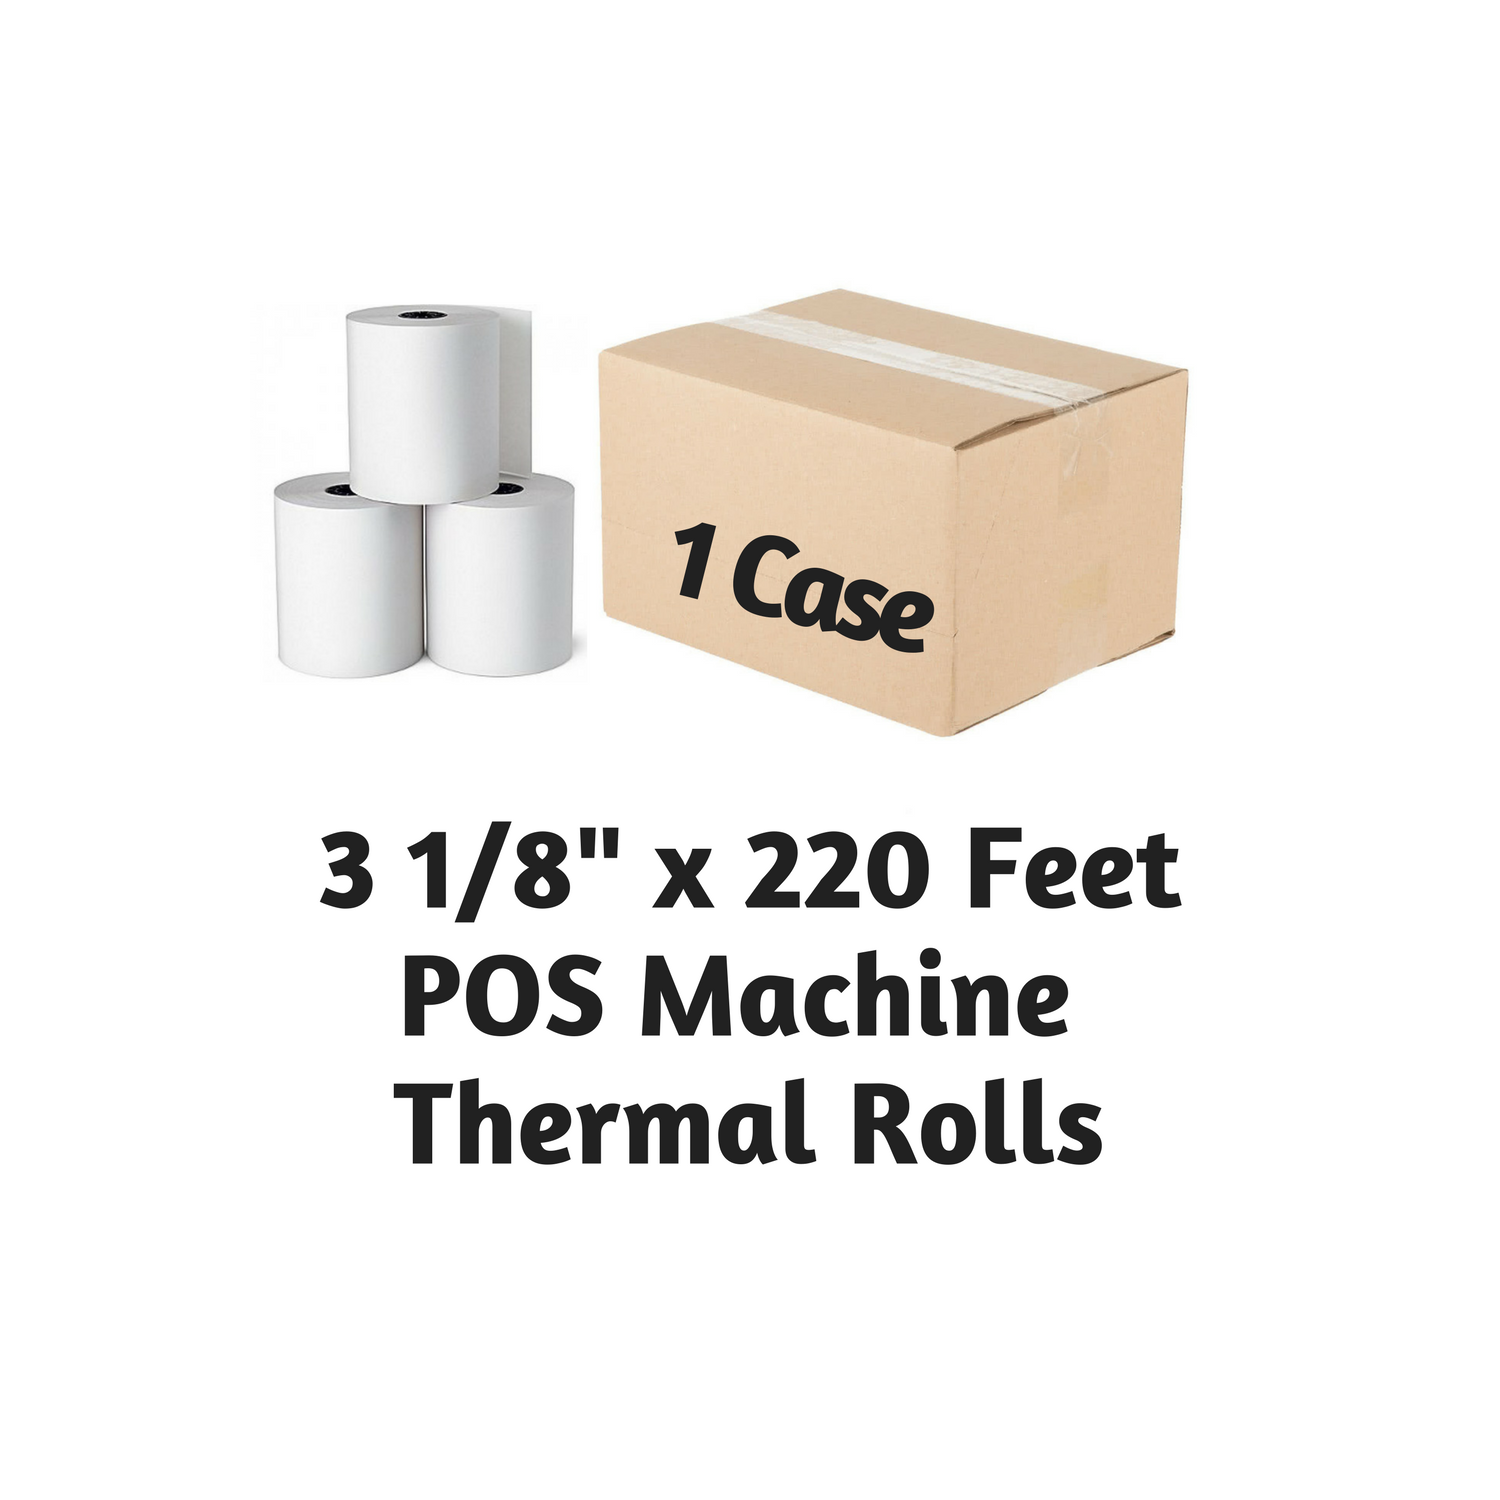 3 1/8" x 225' Feet Thermal Paper Rolls (50 rolls/Case) 1 Case - FREE SHIPPING POS MACHINE ROLLS